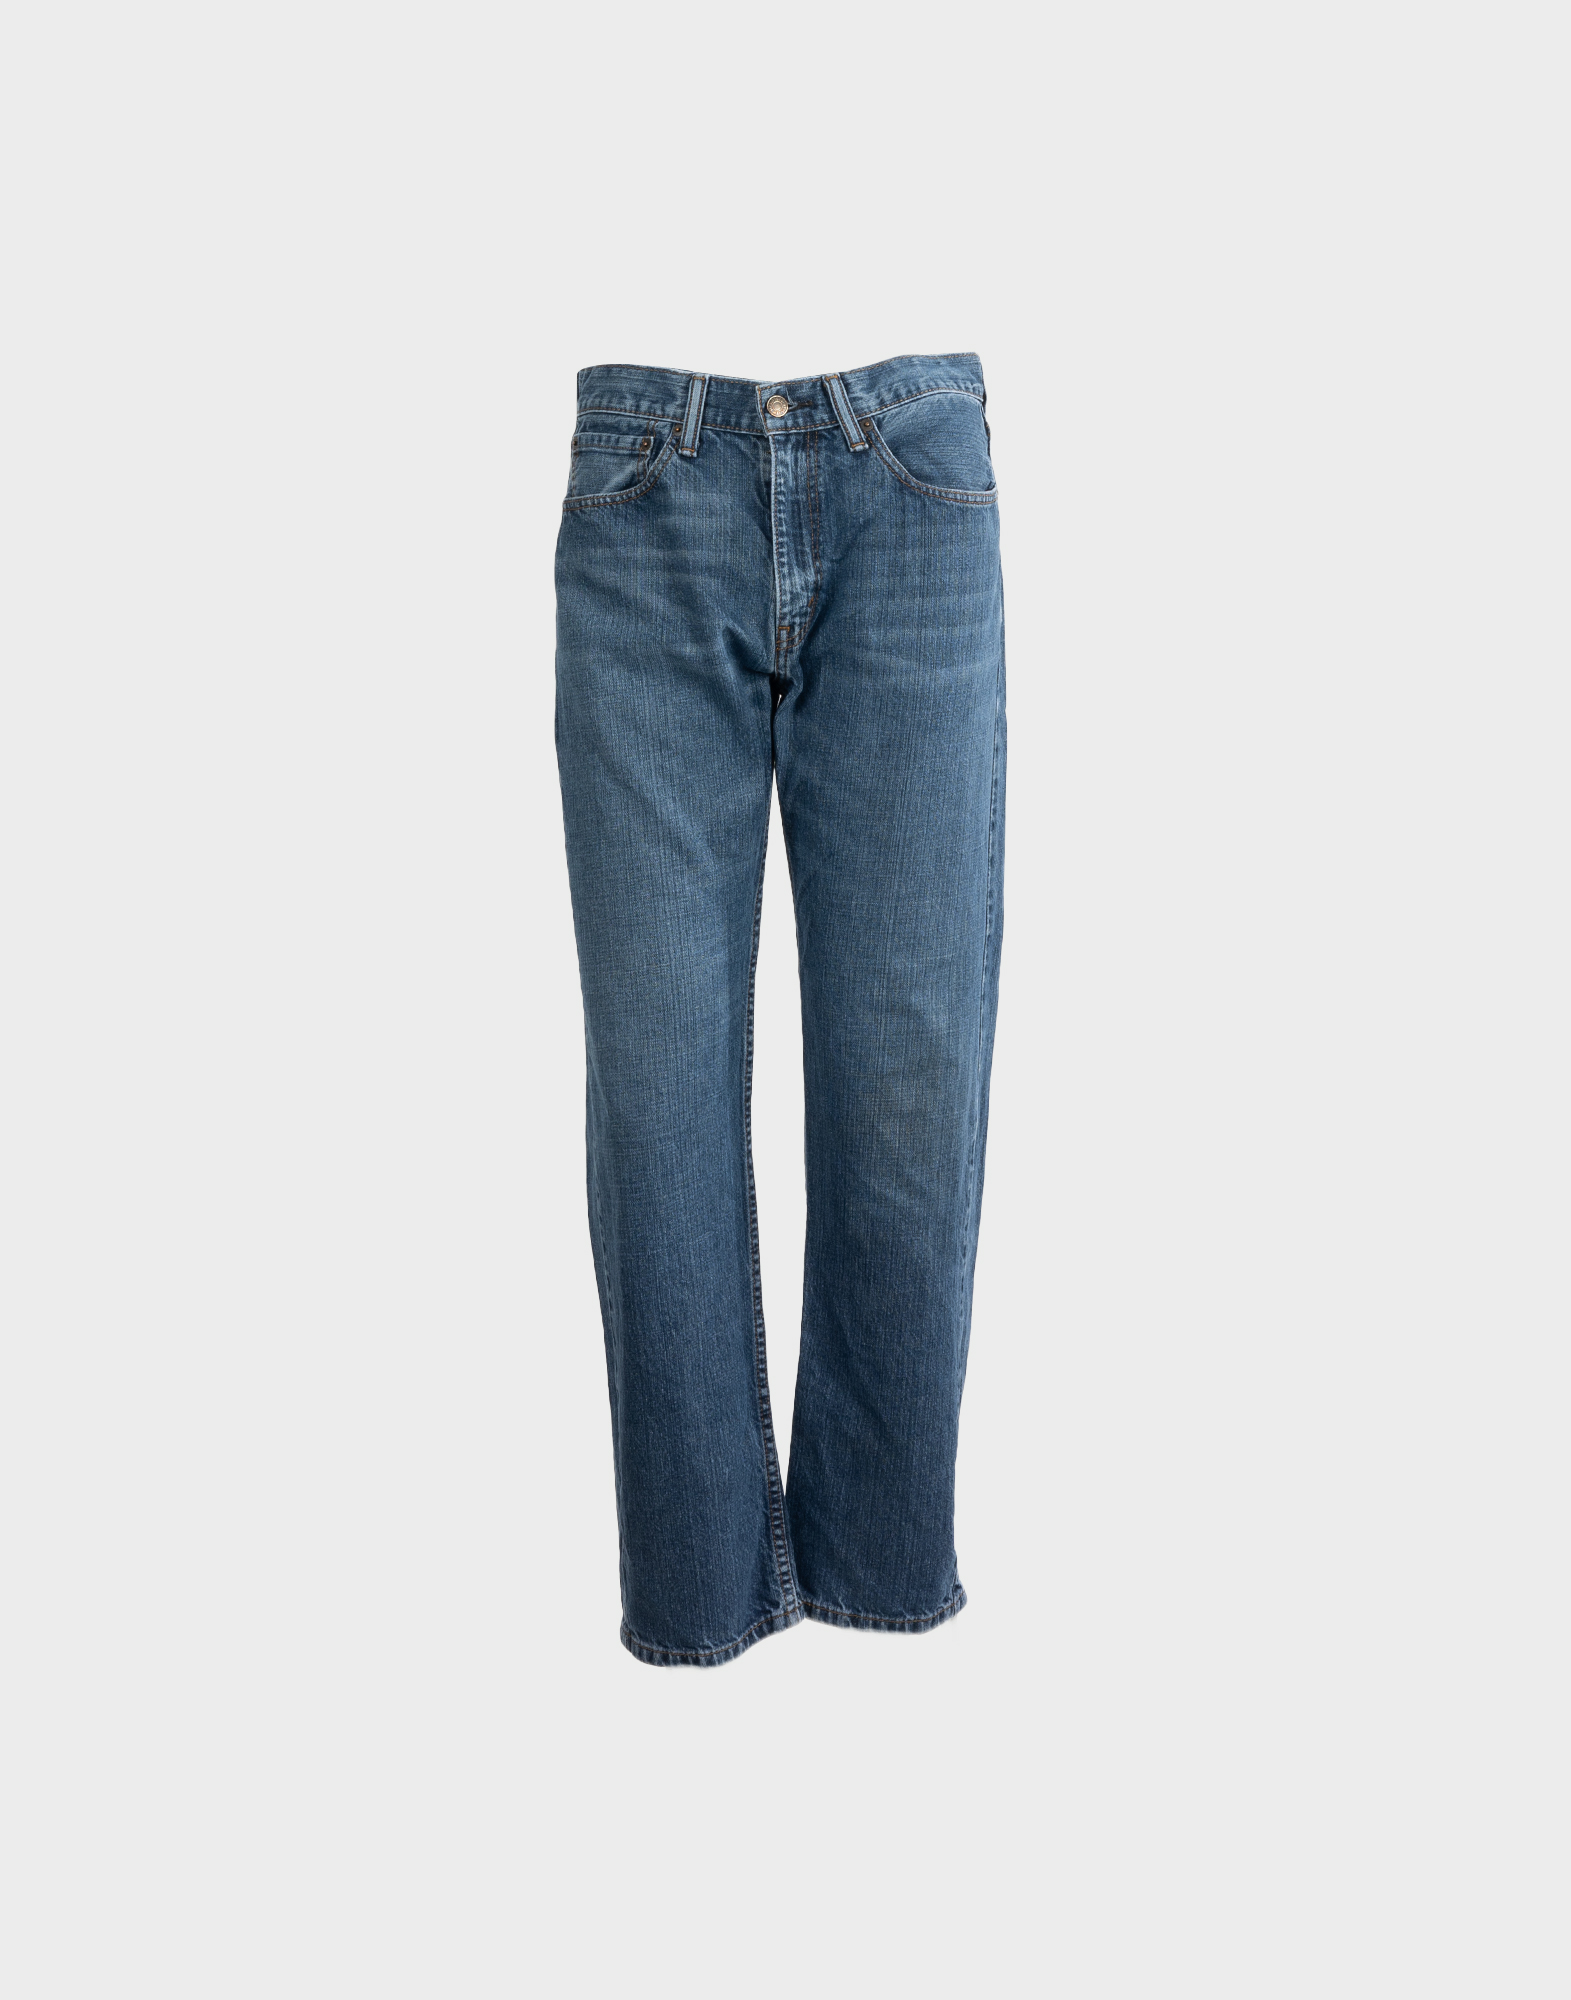 pantaloni jeans levis 505 vintage lavaggio medio